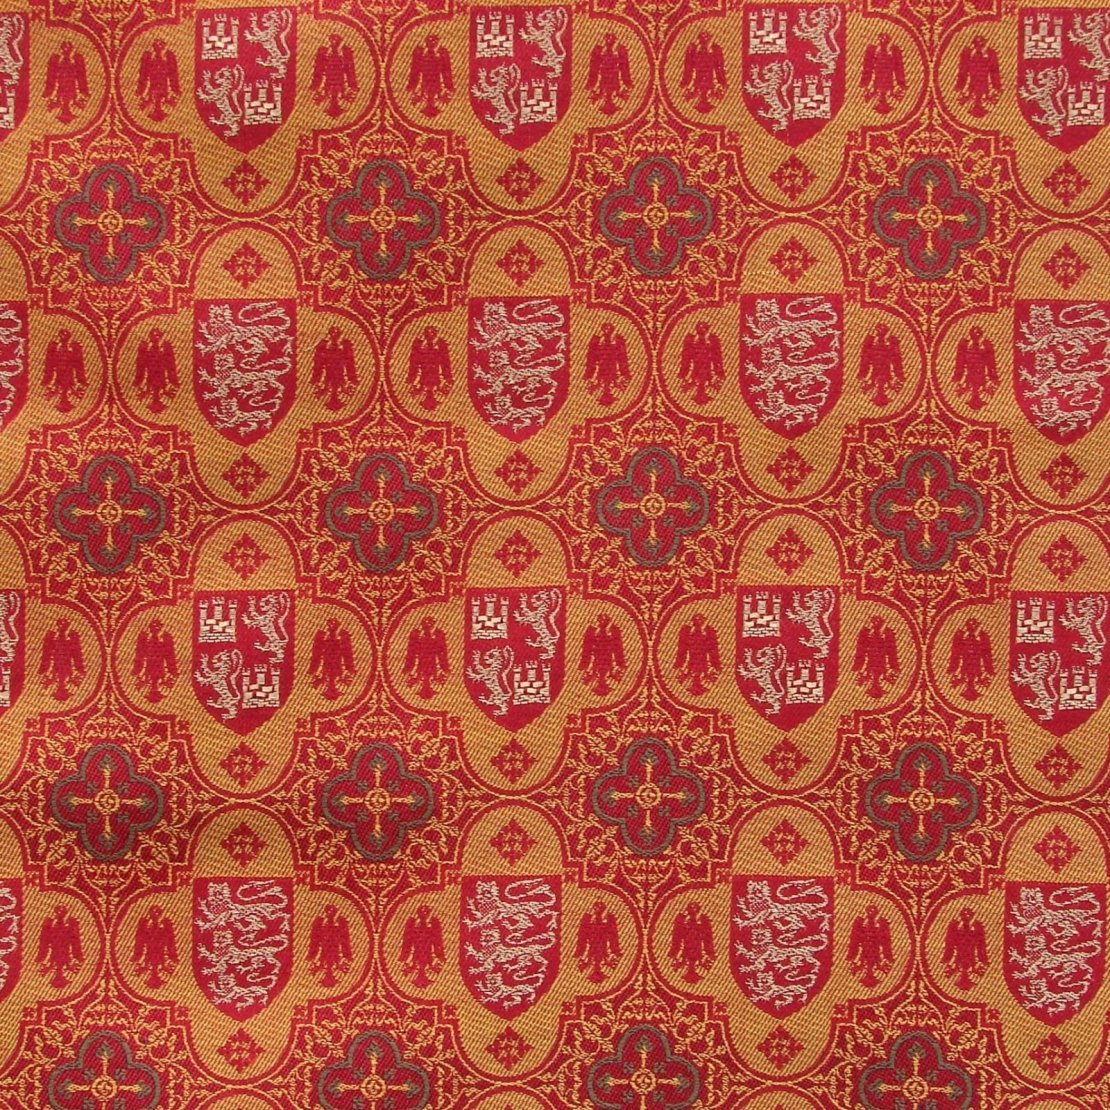 Mediaeval upholstery fabric